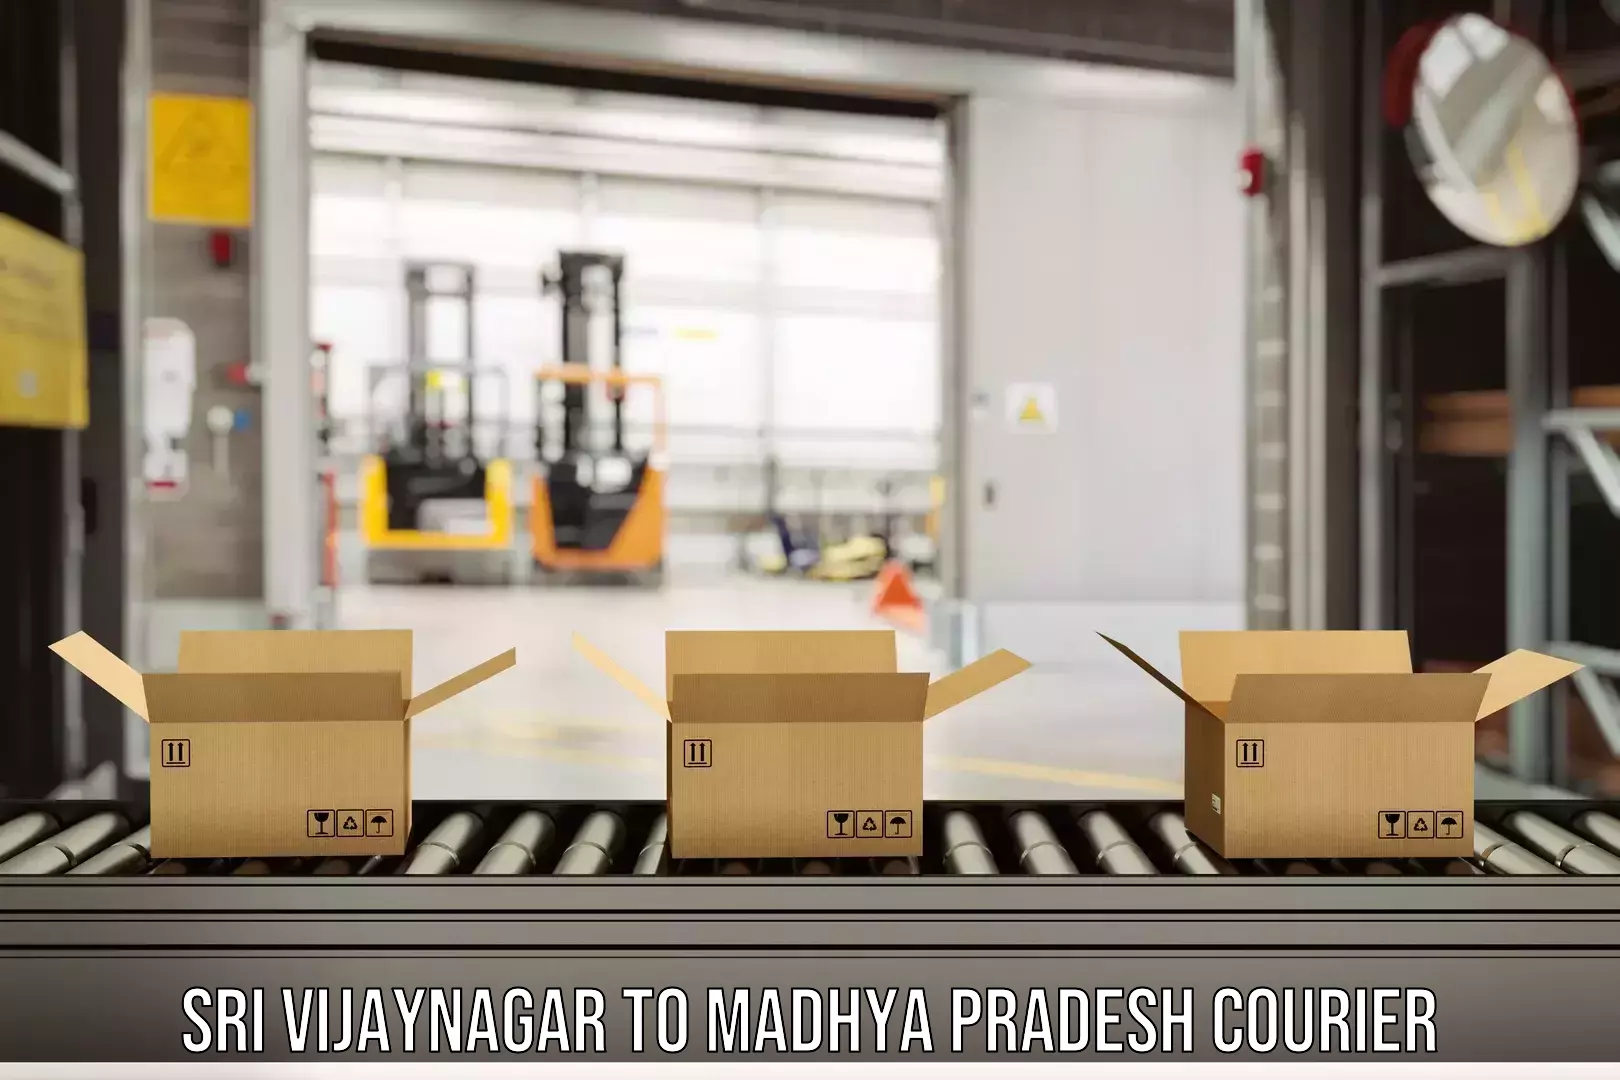 Professional parcel services Sri Vijaynagar to Vidisha